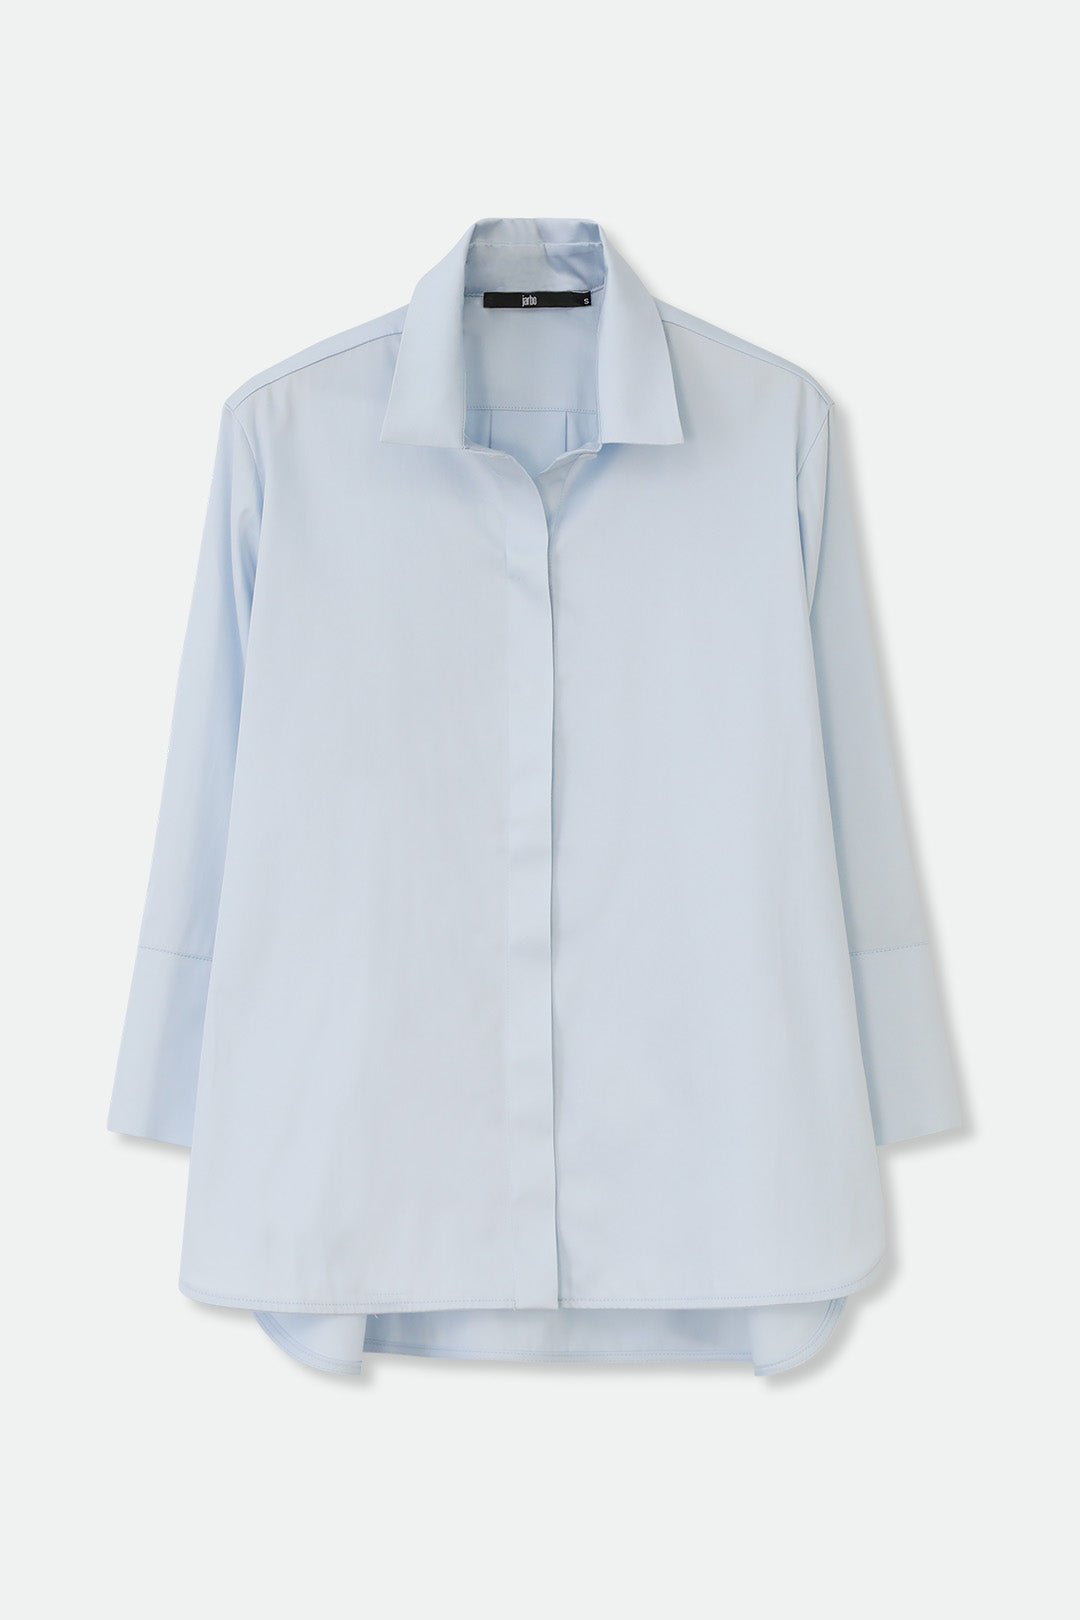 Sevilla Shirt in Italian Cotton Poplin Stretch White / M